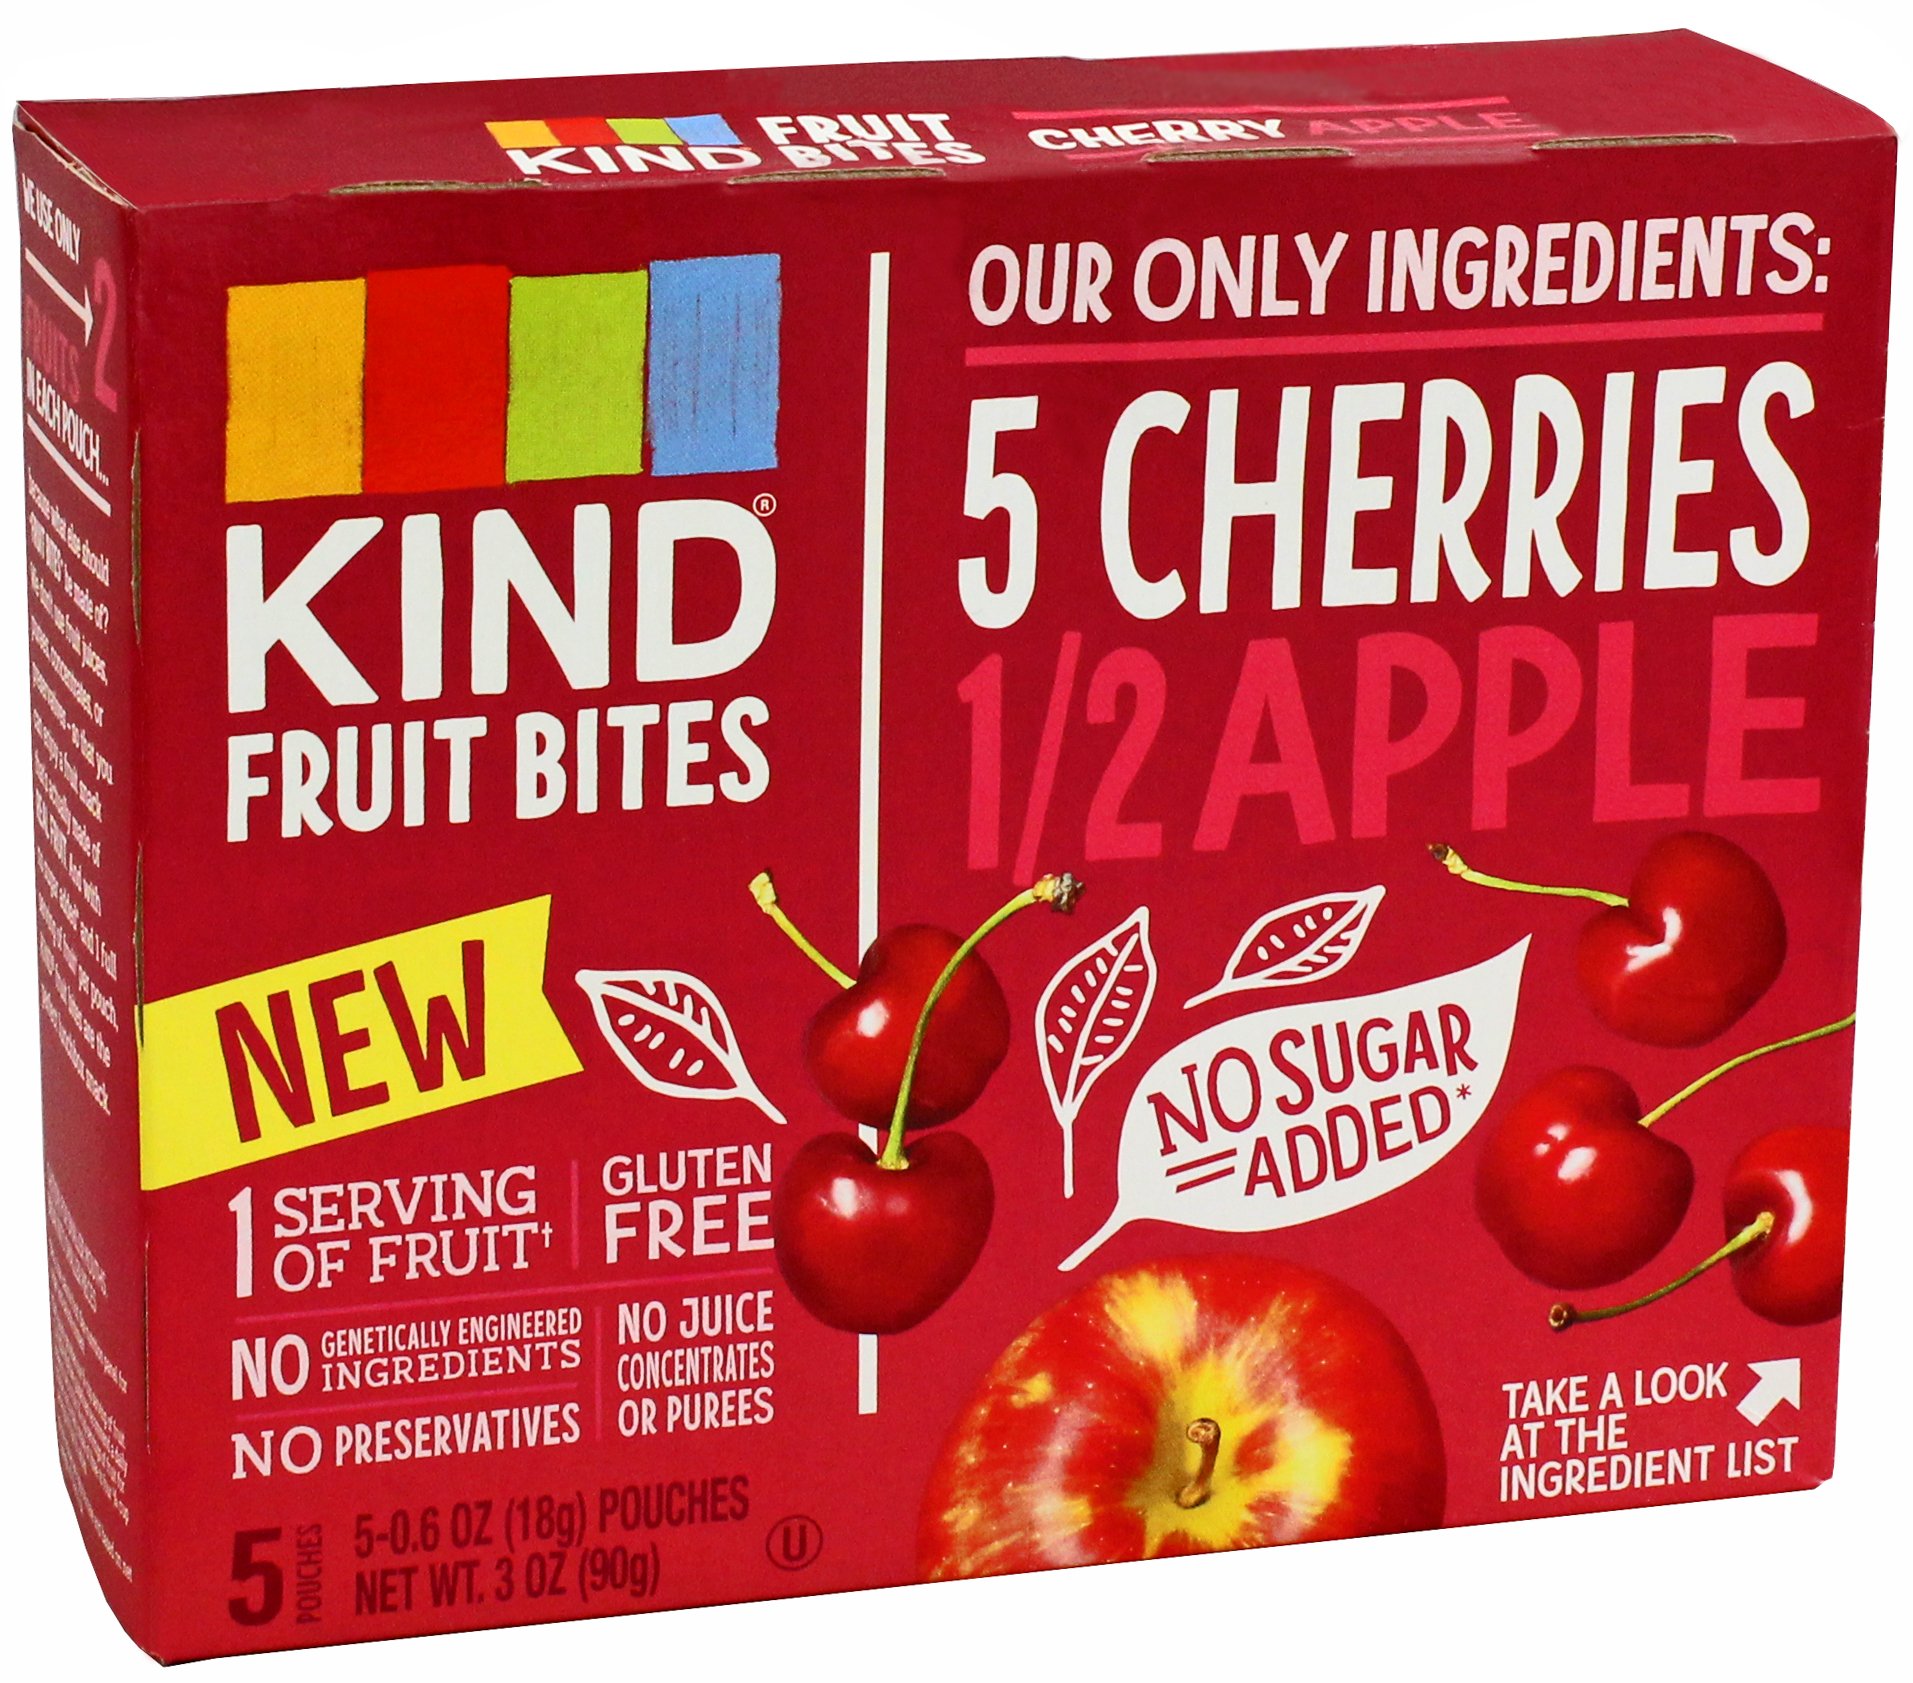 Kind Fruit Bites Cherry Apple - Shop Fruit Snacks at H-E-B